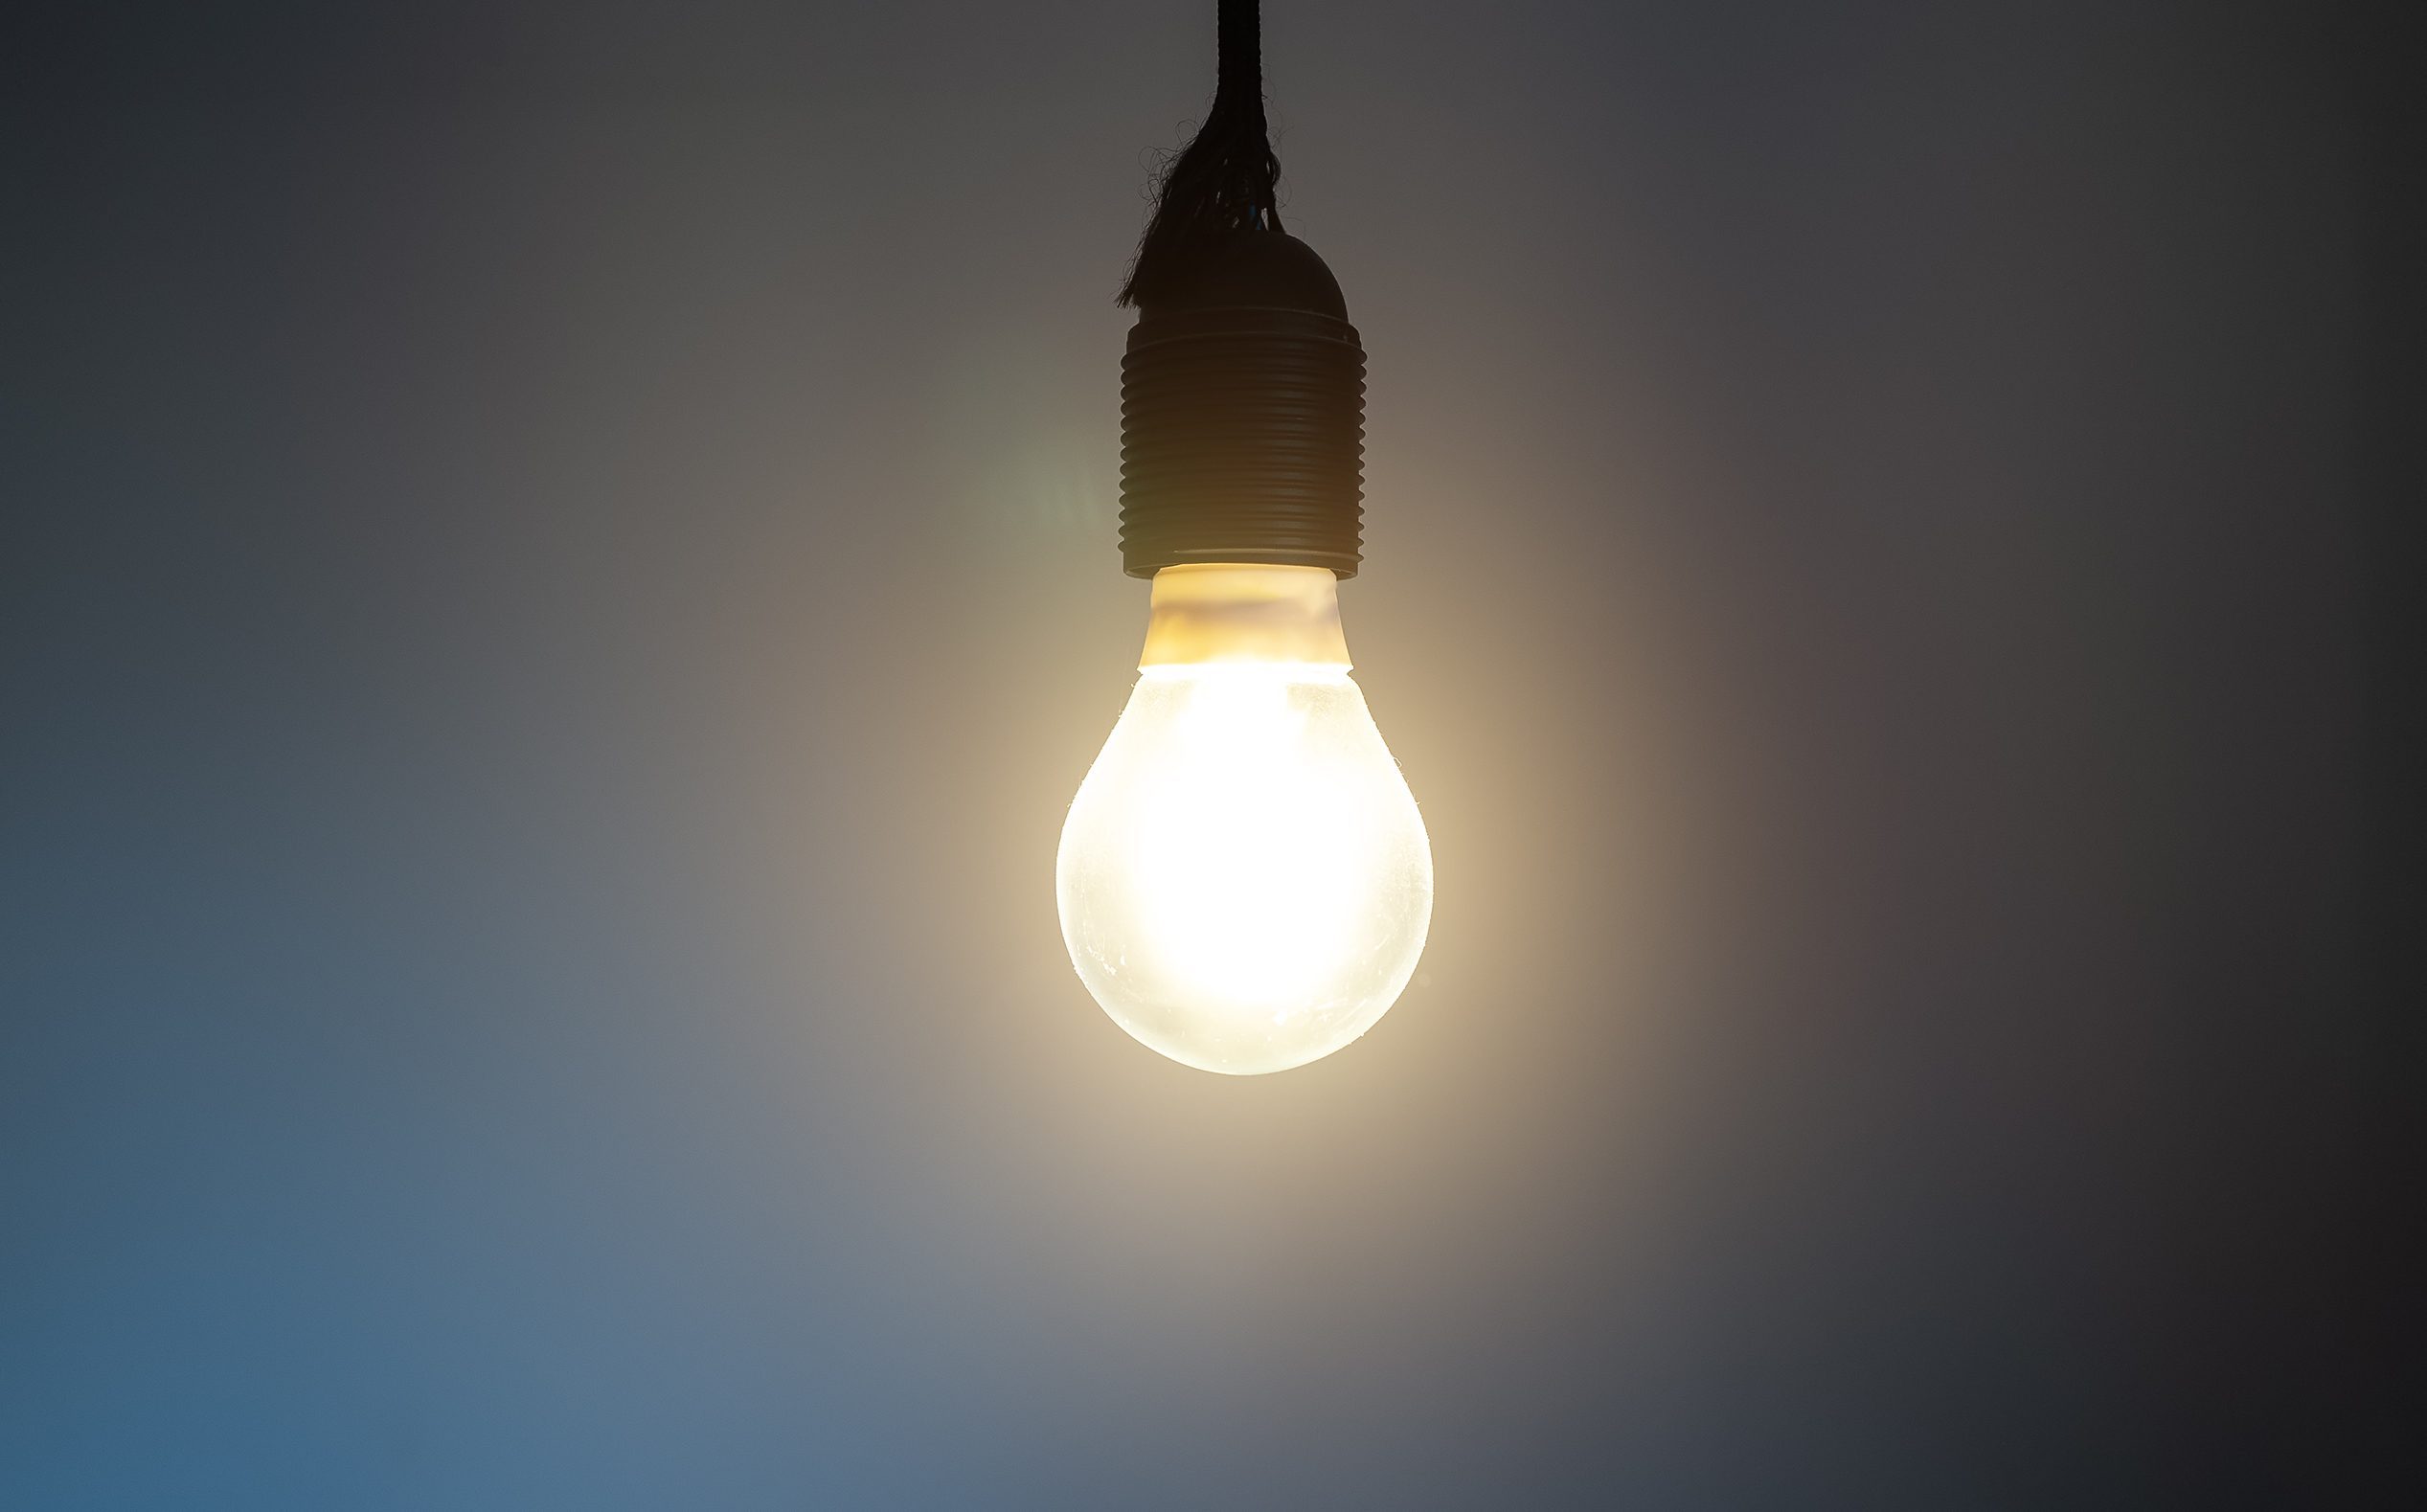 6 Ways to Fix a Flickering Light Bulb